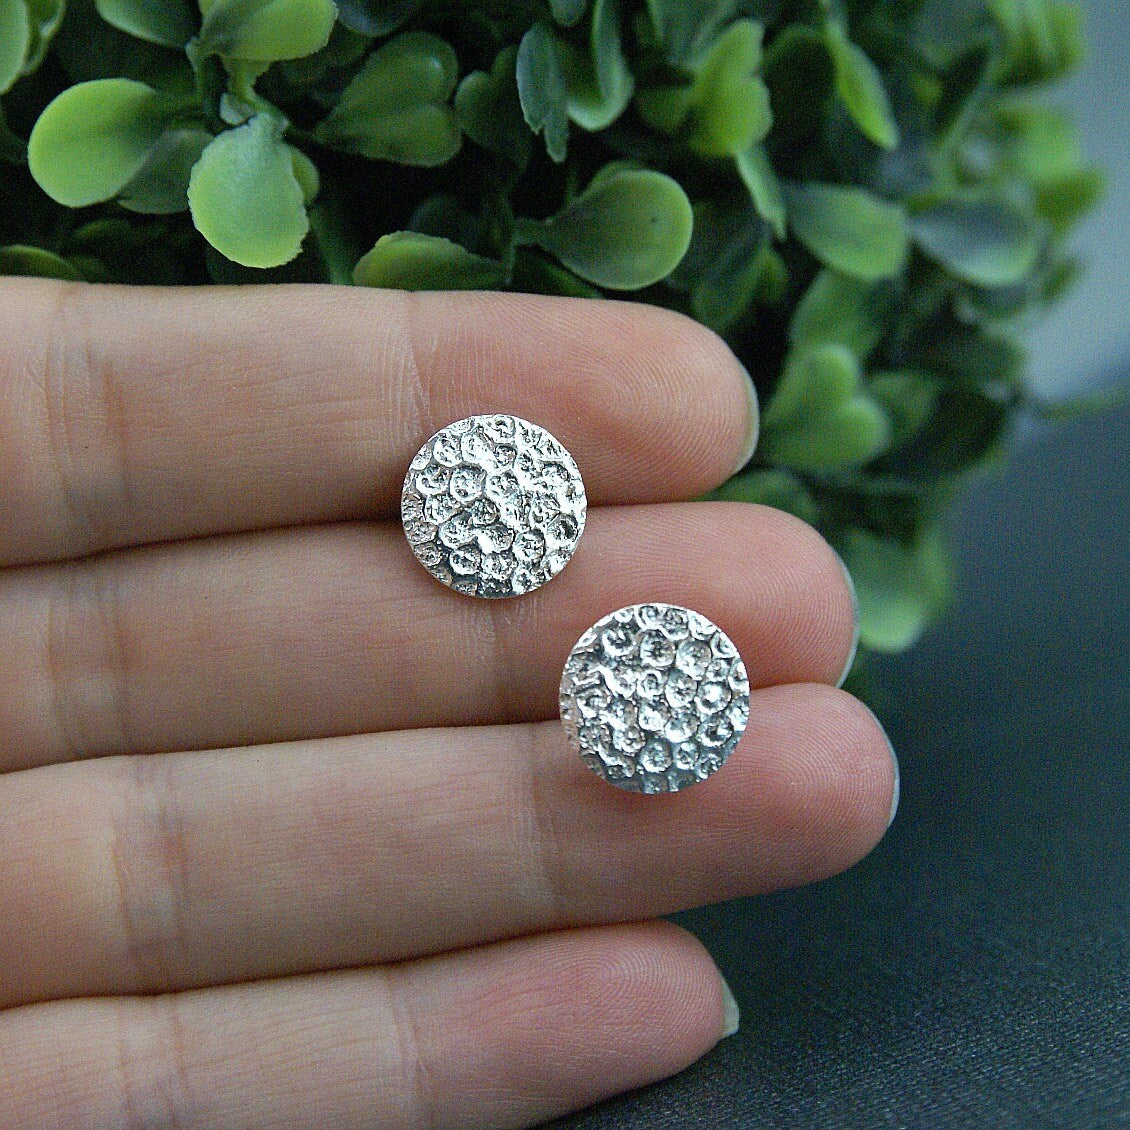 Large Coral Stud Earrings in Sterling Silver